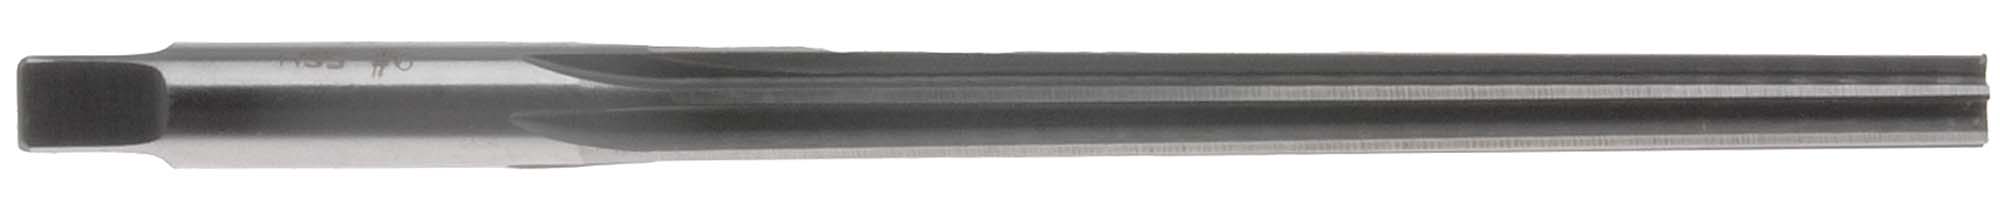 #9 Straight Flute Taper Pin Reamer, High Speed Steel